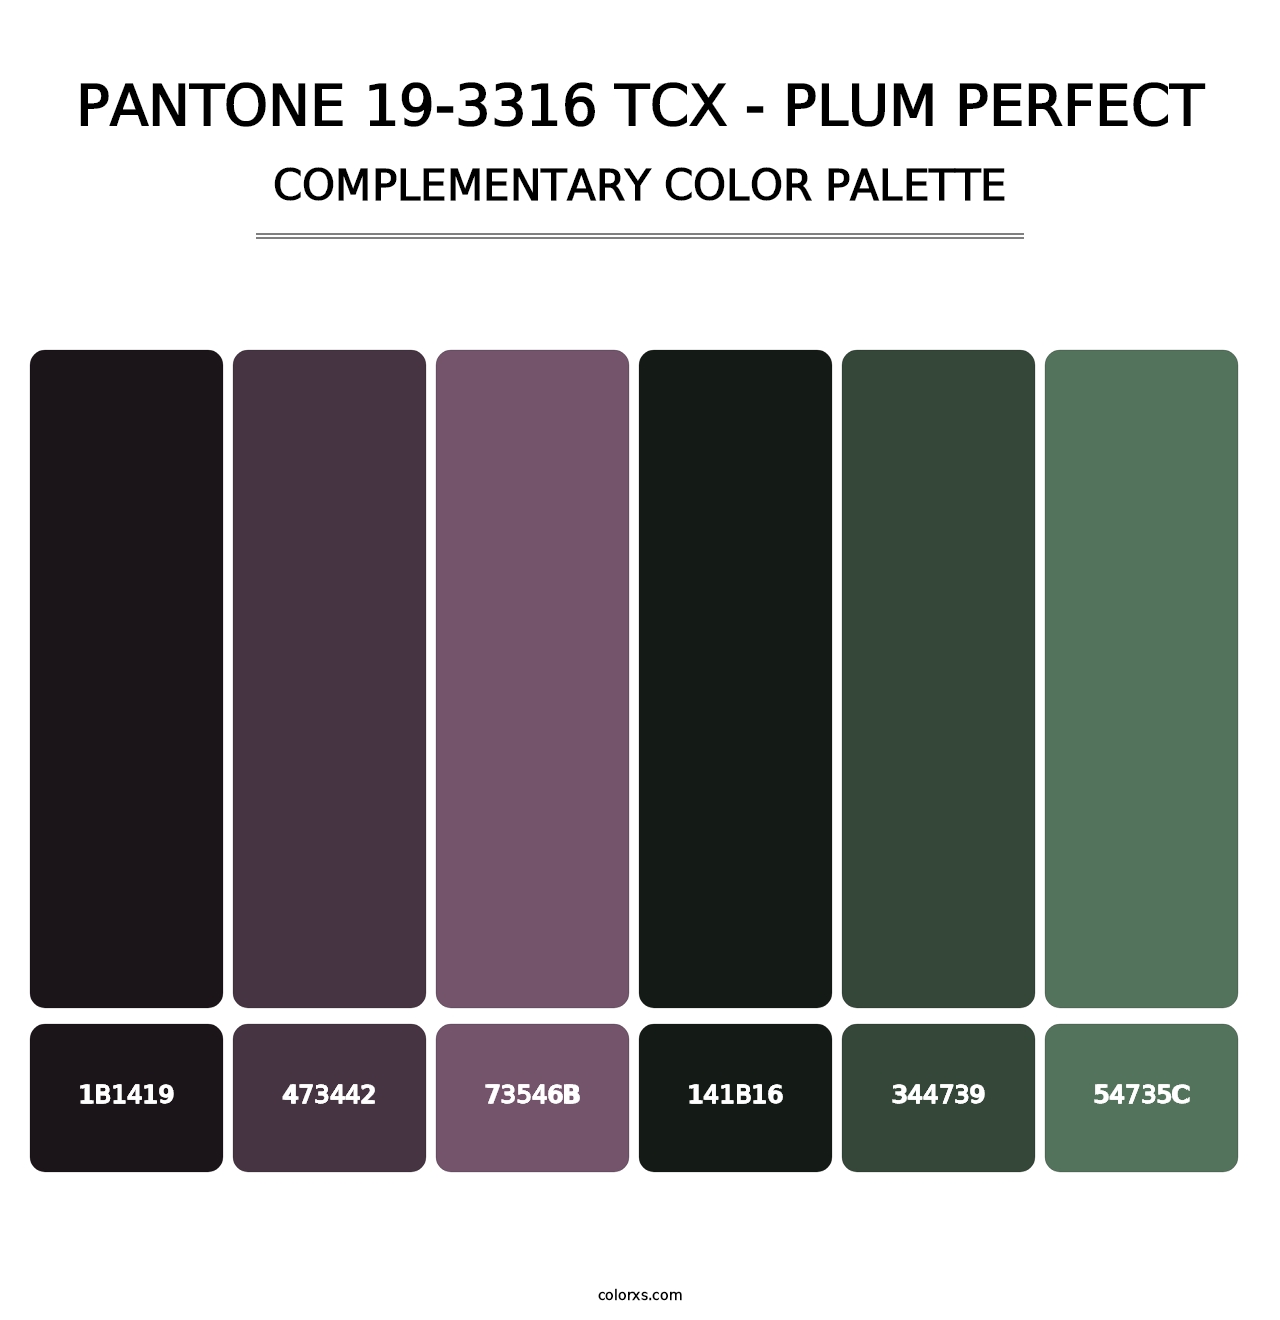 PANTONE 19-3316 TCX - Plum Perfect - Complementary Color Palette